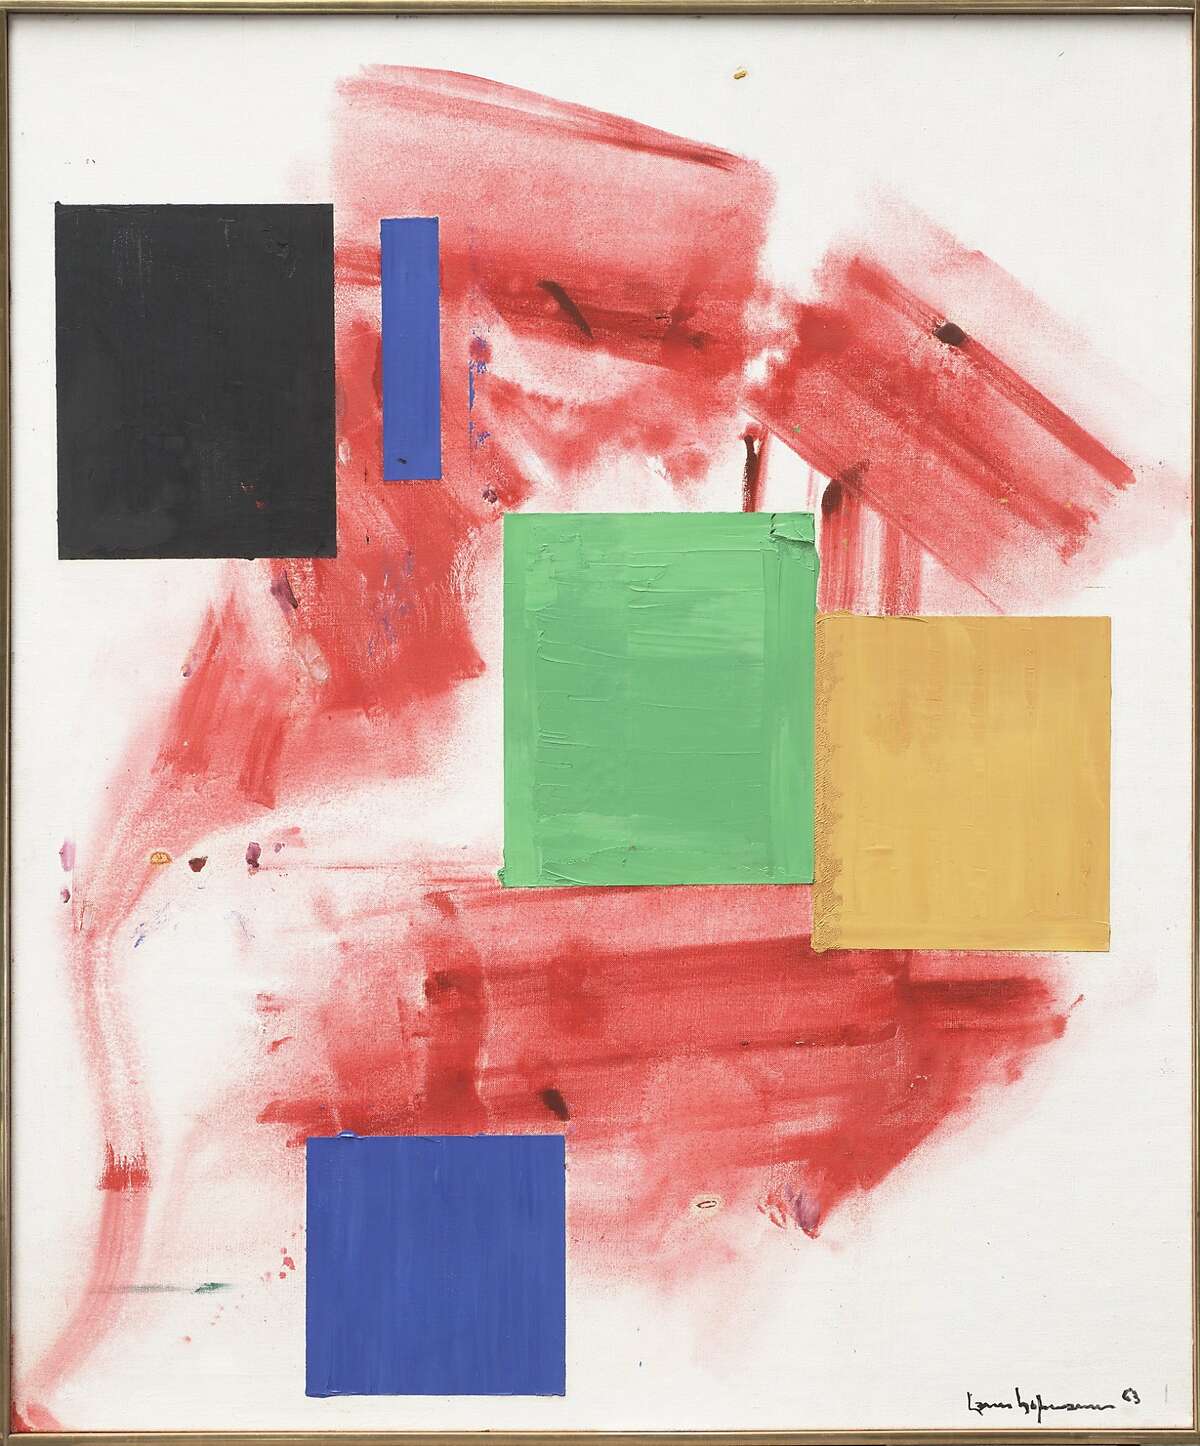 Hans Hofmann: Polyhymnia, 1963; oil on canvas; 72-1/8 x 60-1/4 in.; gift of the artist. ARTIST: Hofmann, Hans NATIONALITY: United States, born Germany DATE_OF_WORK: 1963 MATERIALS: oil on canvas DIMENSIONS: 72 -1/8 x 60 -1/4 CREDIT_LINE: Gift of Hans Hofmann